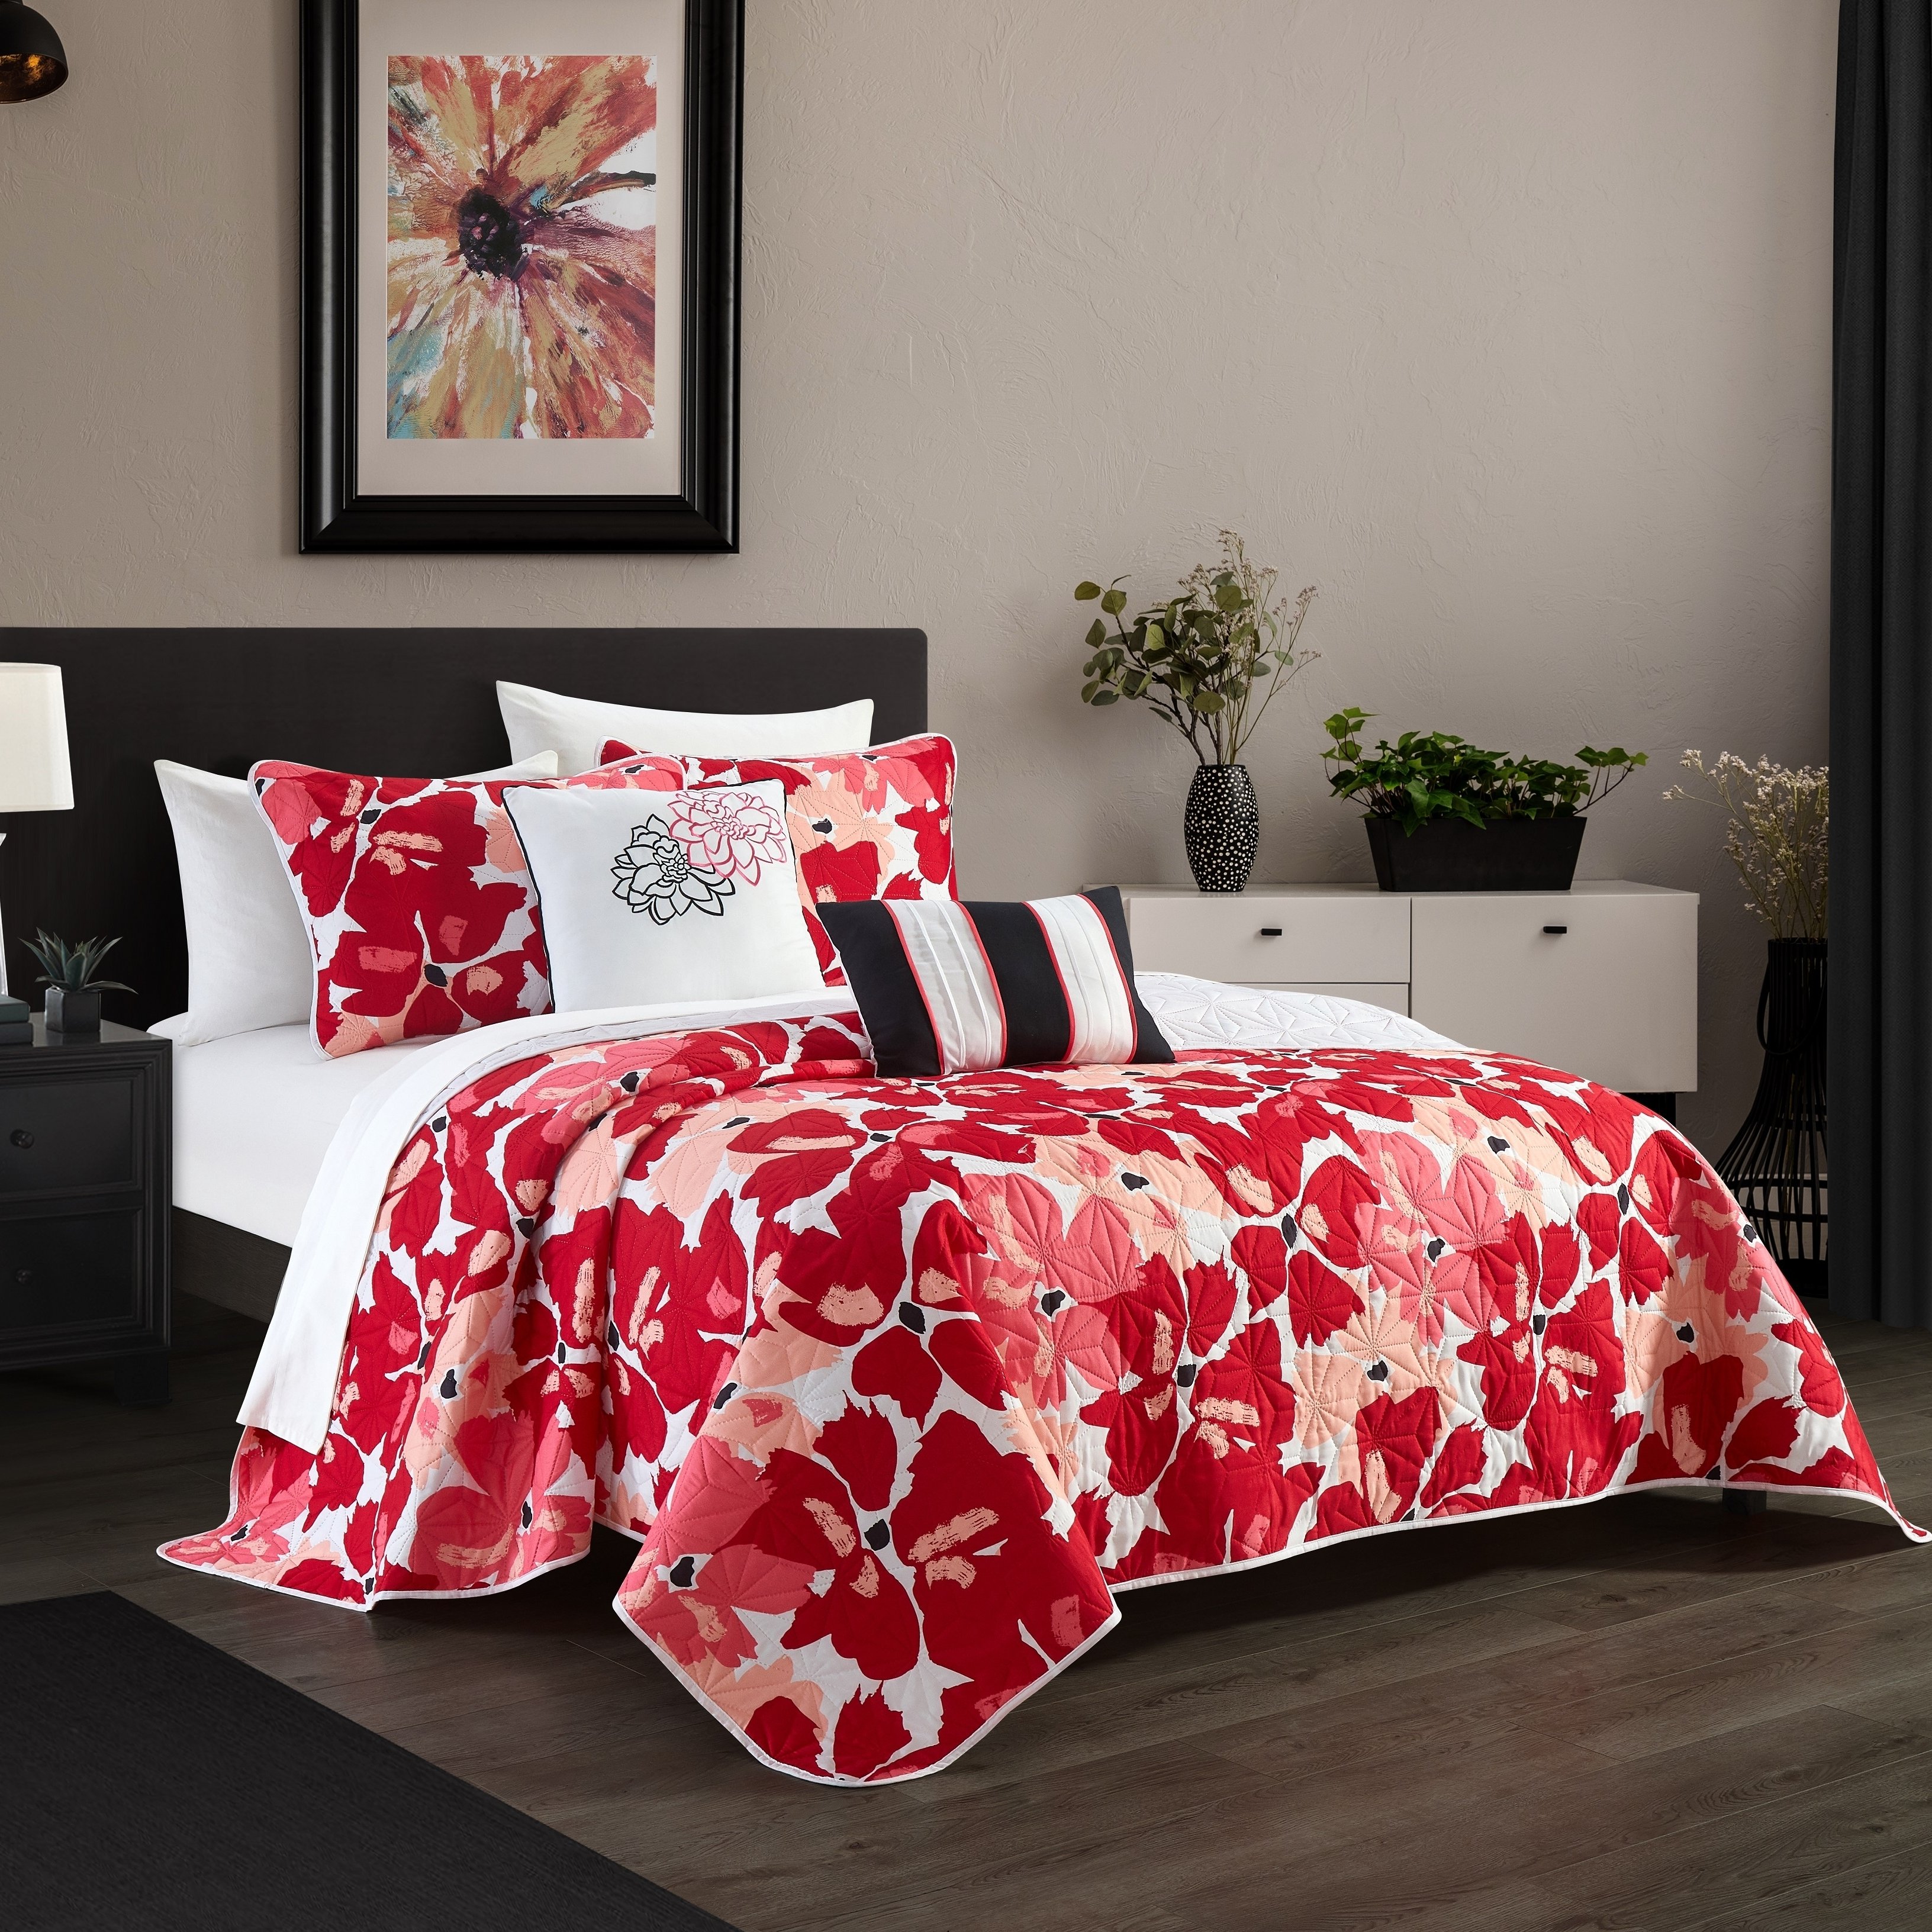 Aster 5 Piece Quilt Set Contemporary Floral Design Bedding - Black, Queen